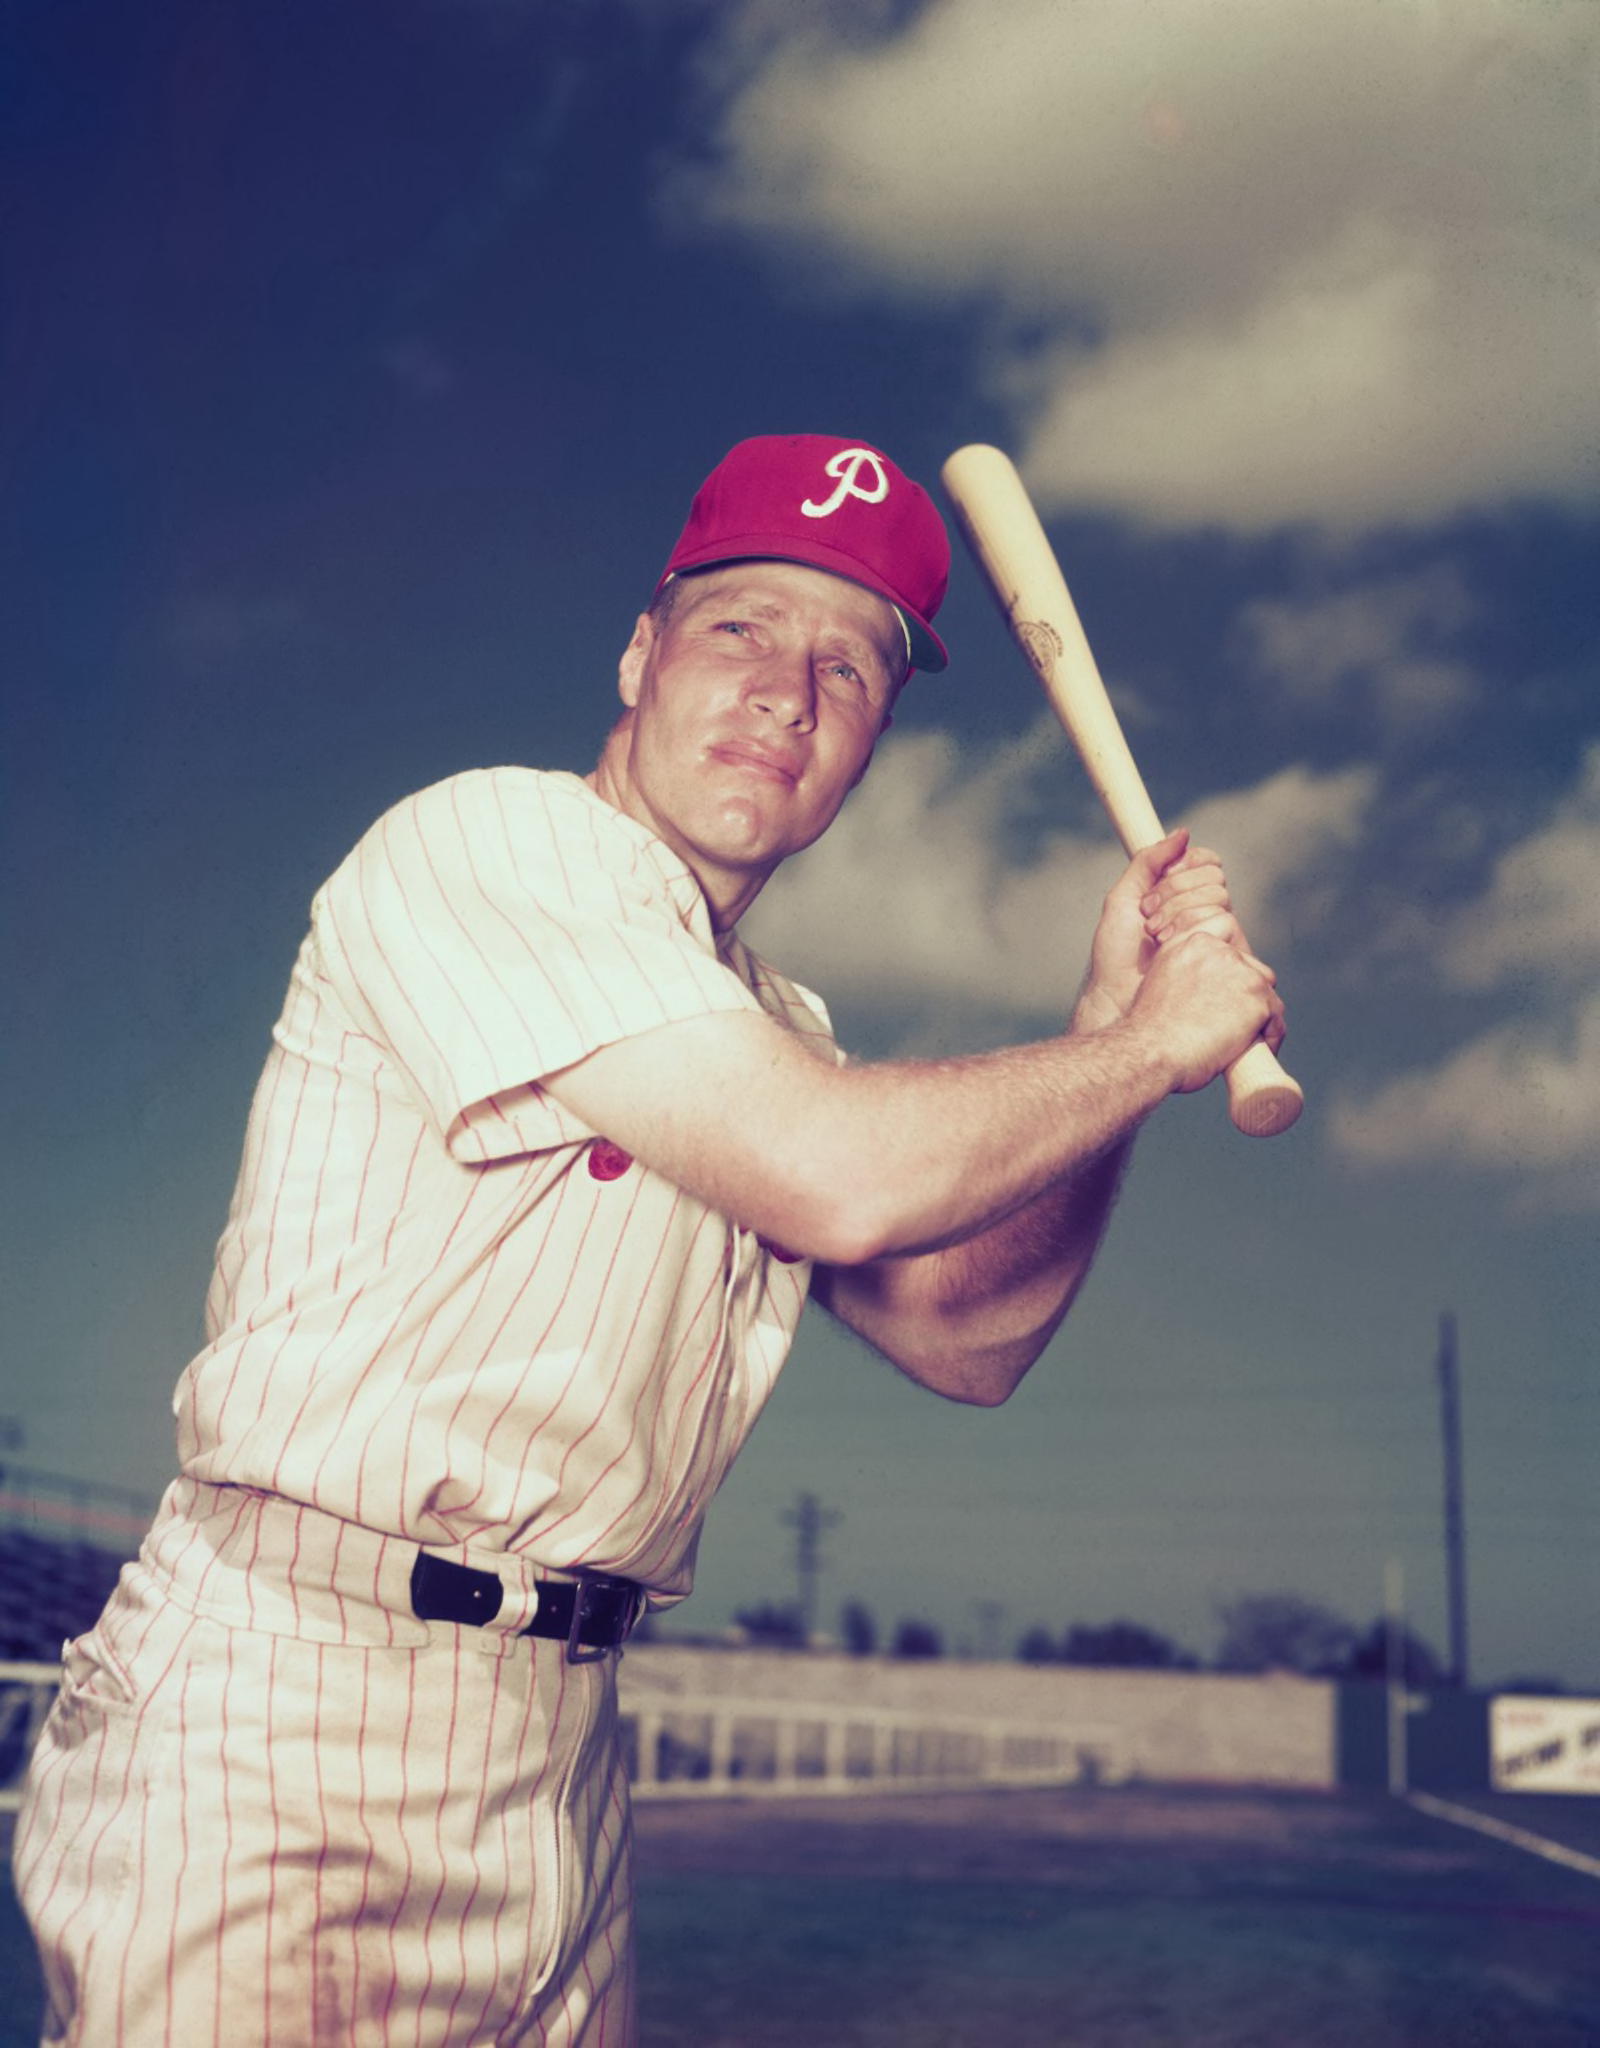 Richie Ashburn 1950 Philadelphia Phillies Jersey